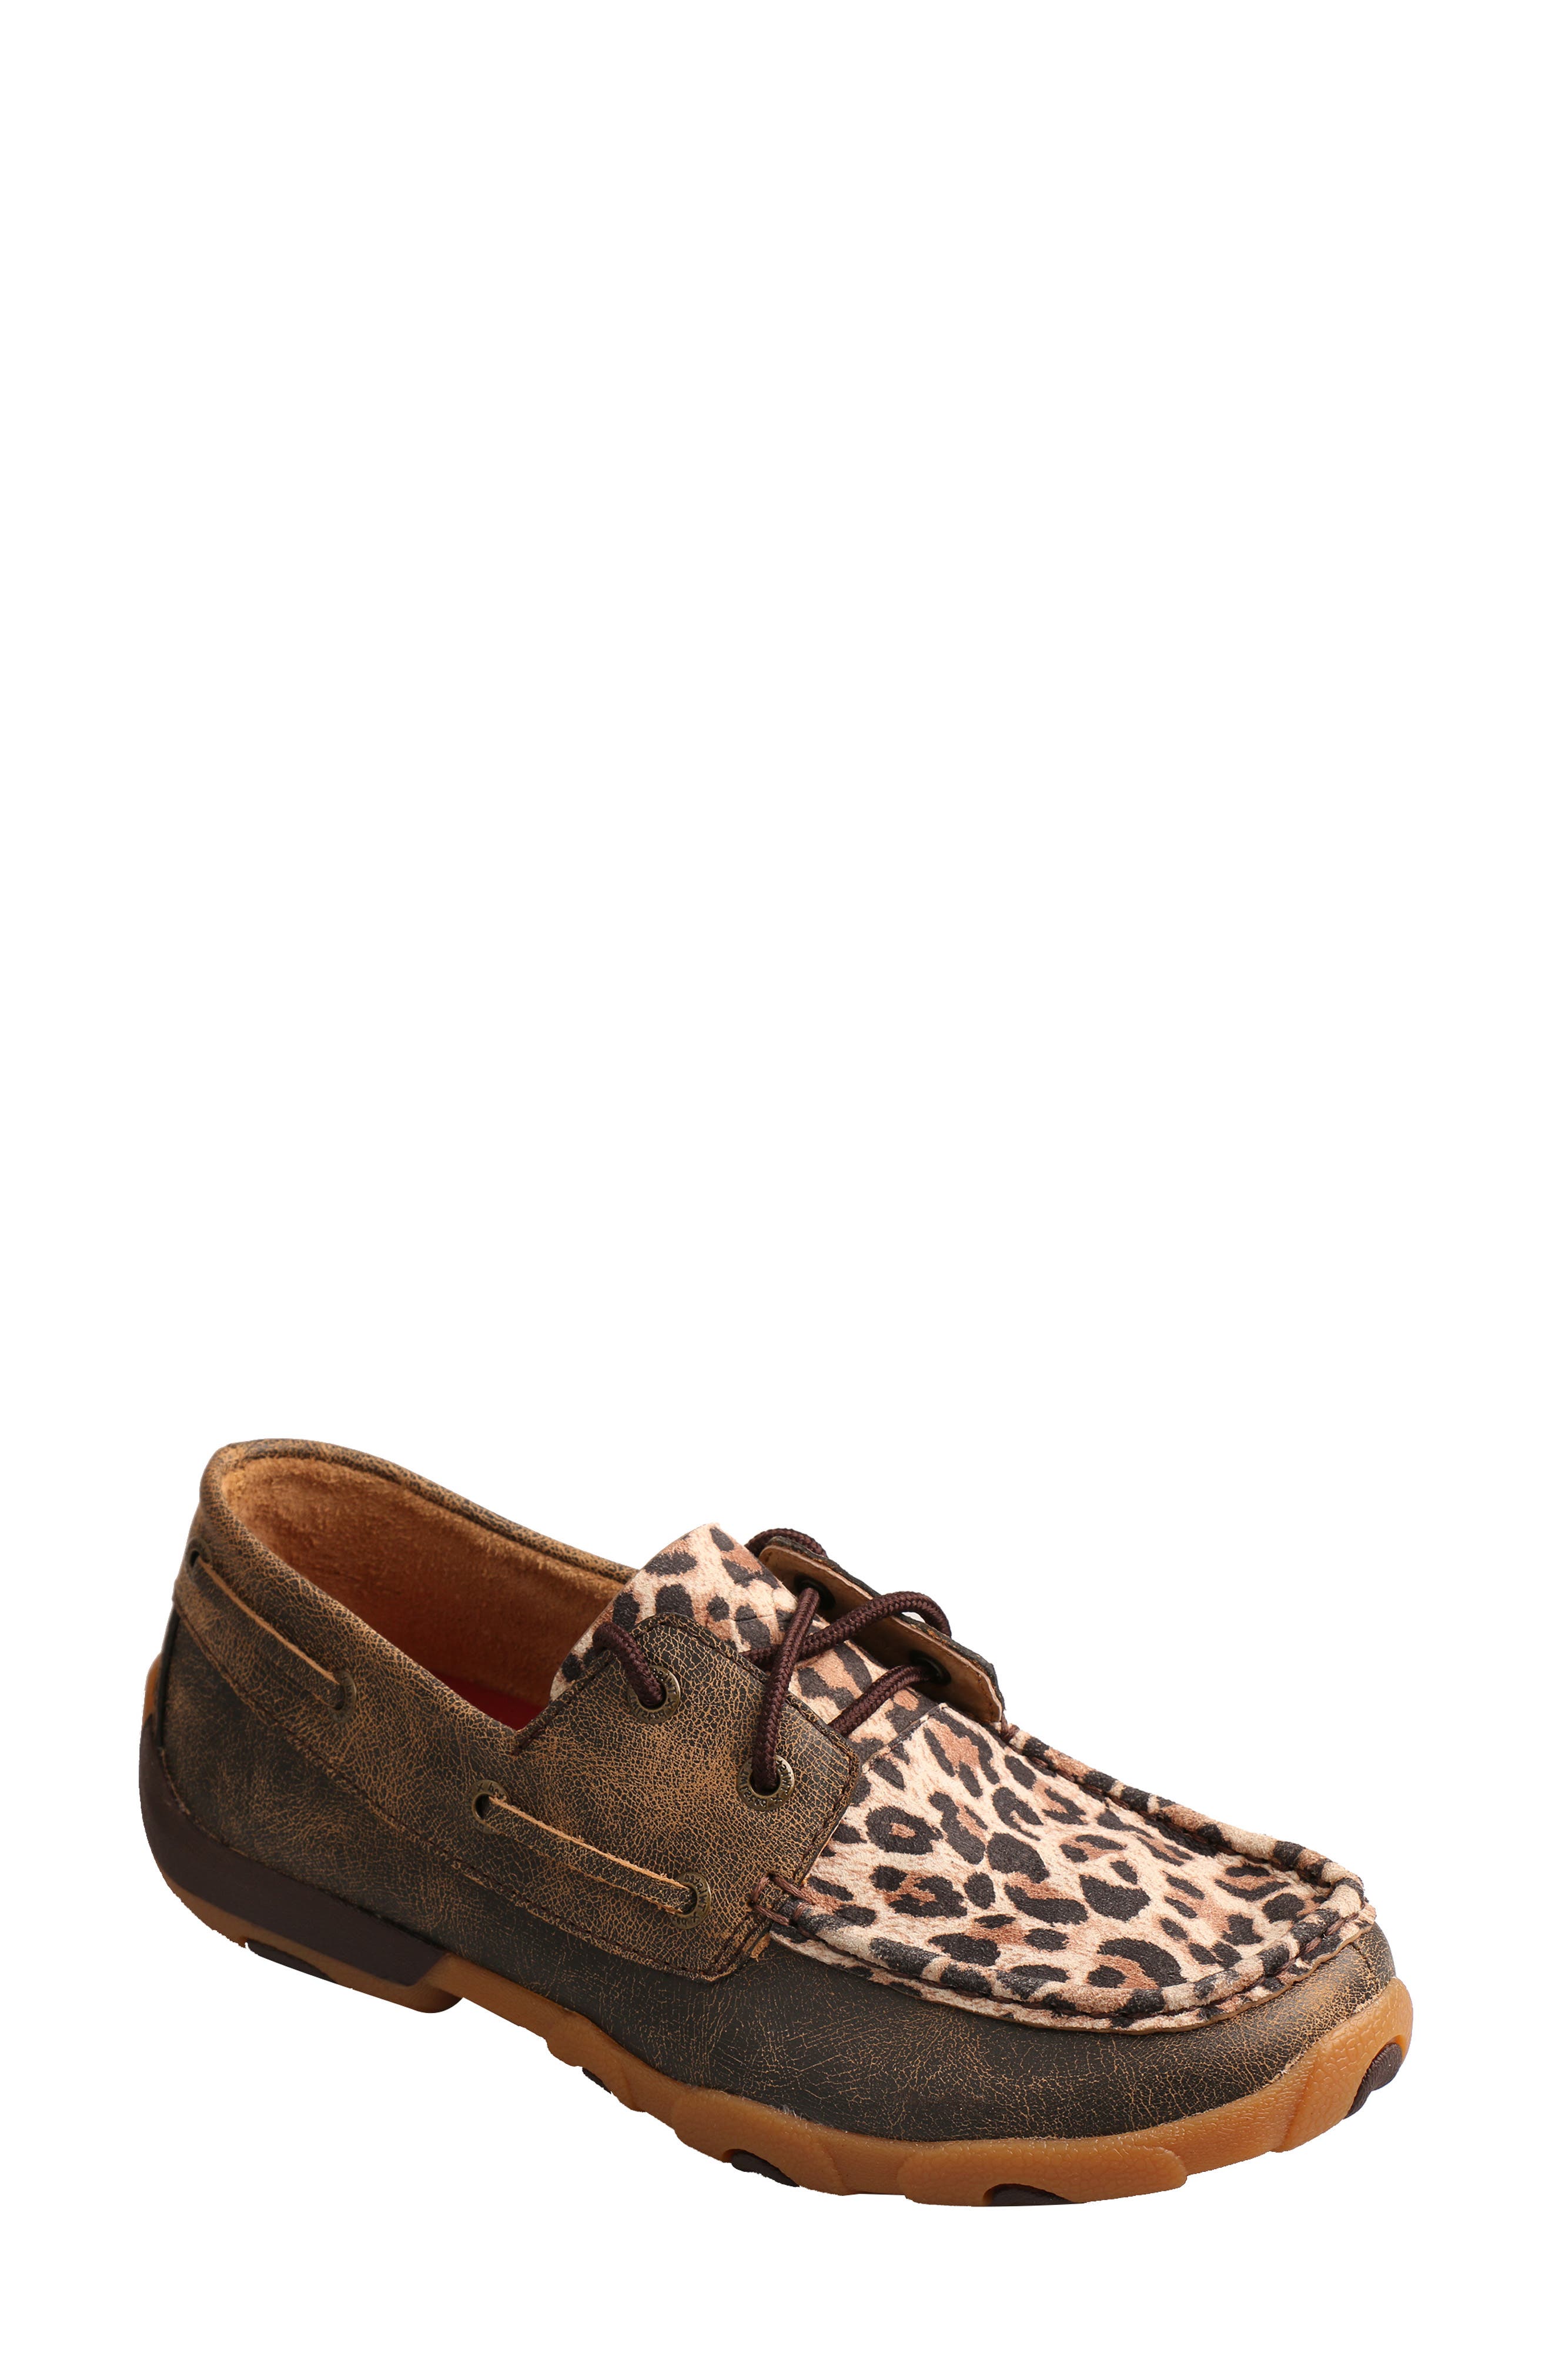 women's twisted x leopard shoes